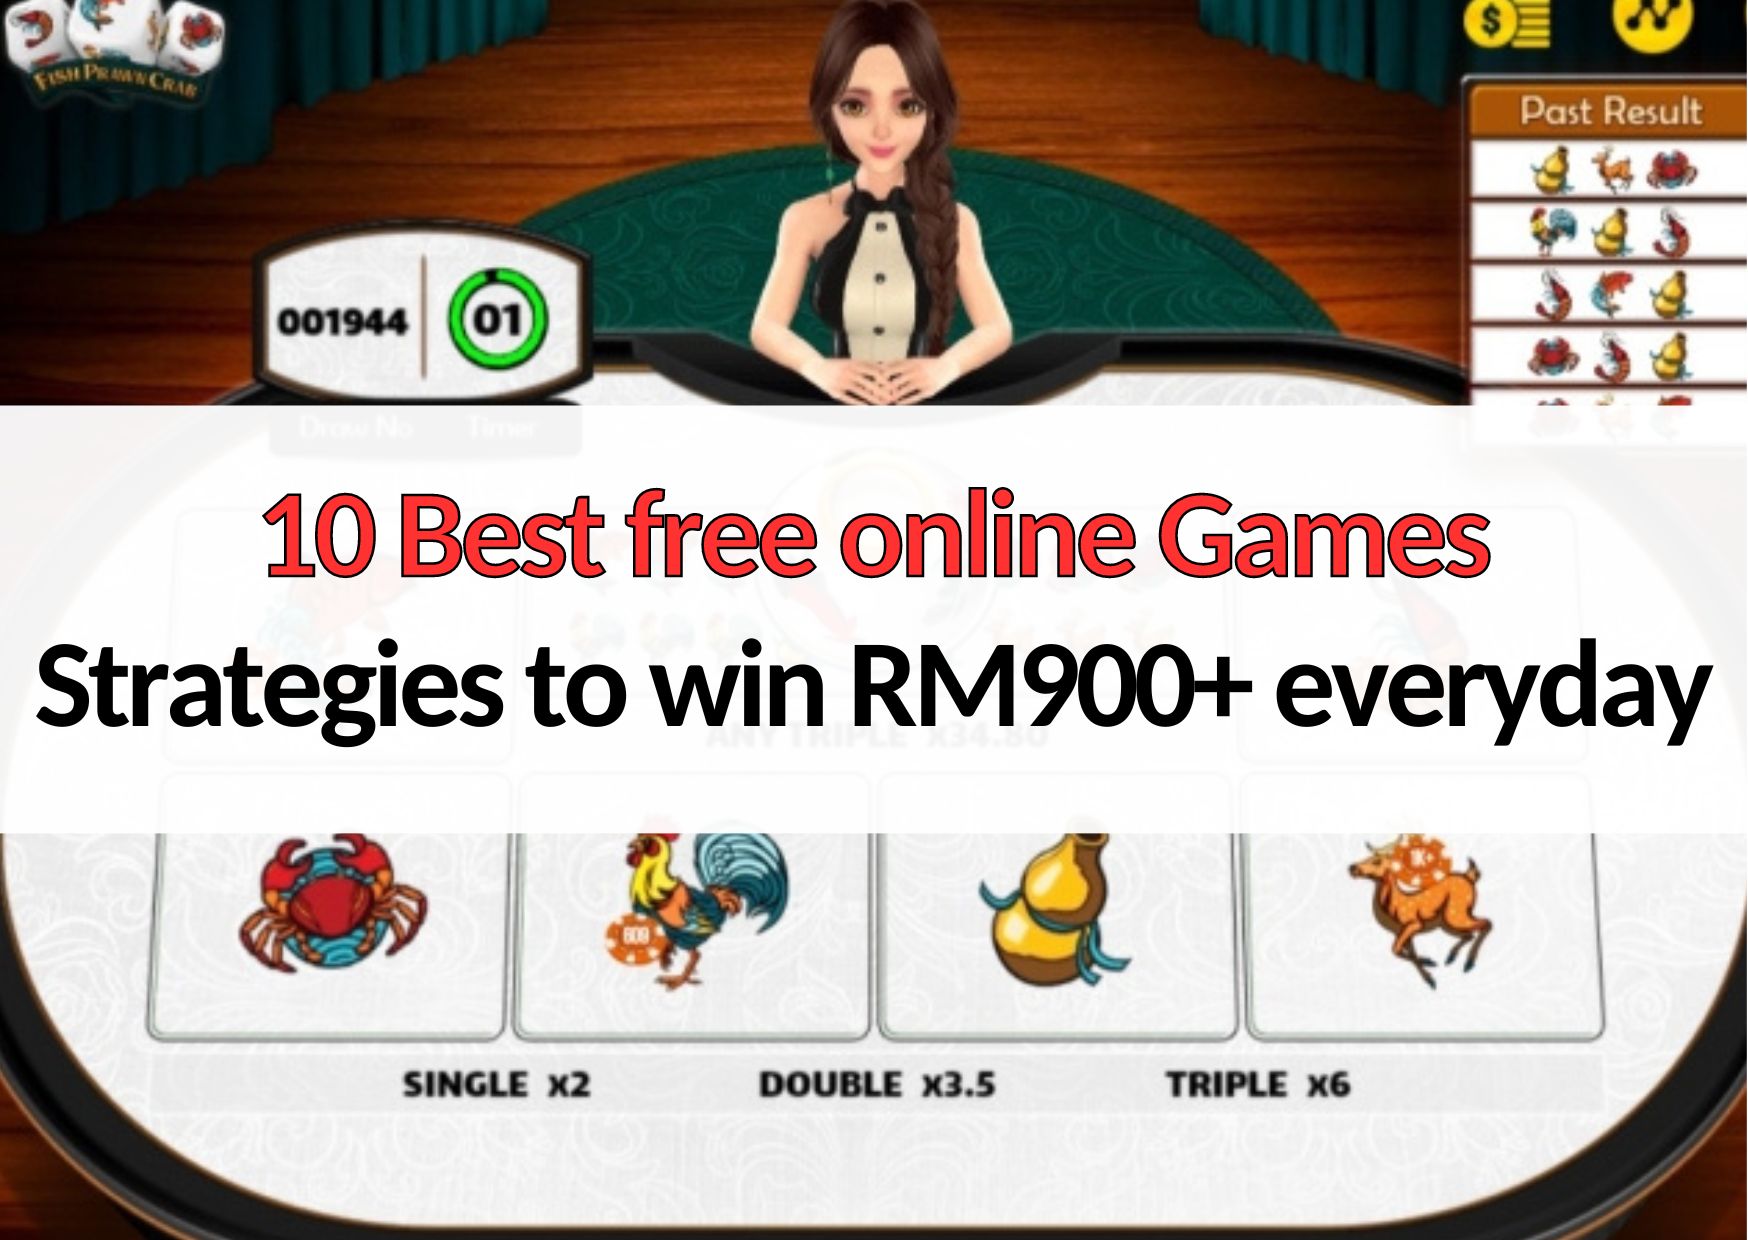 10 best free online games strategies to win everyday